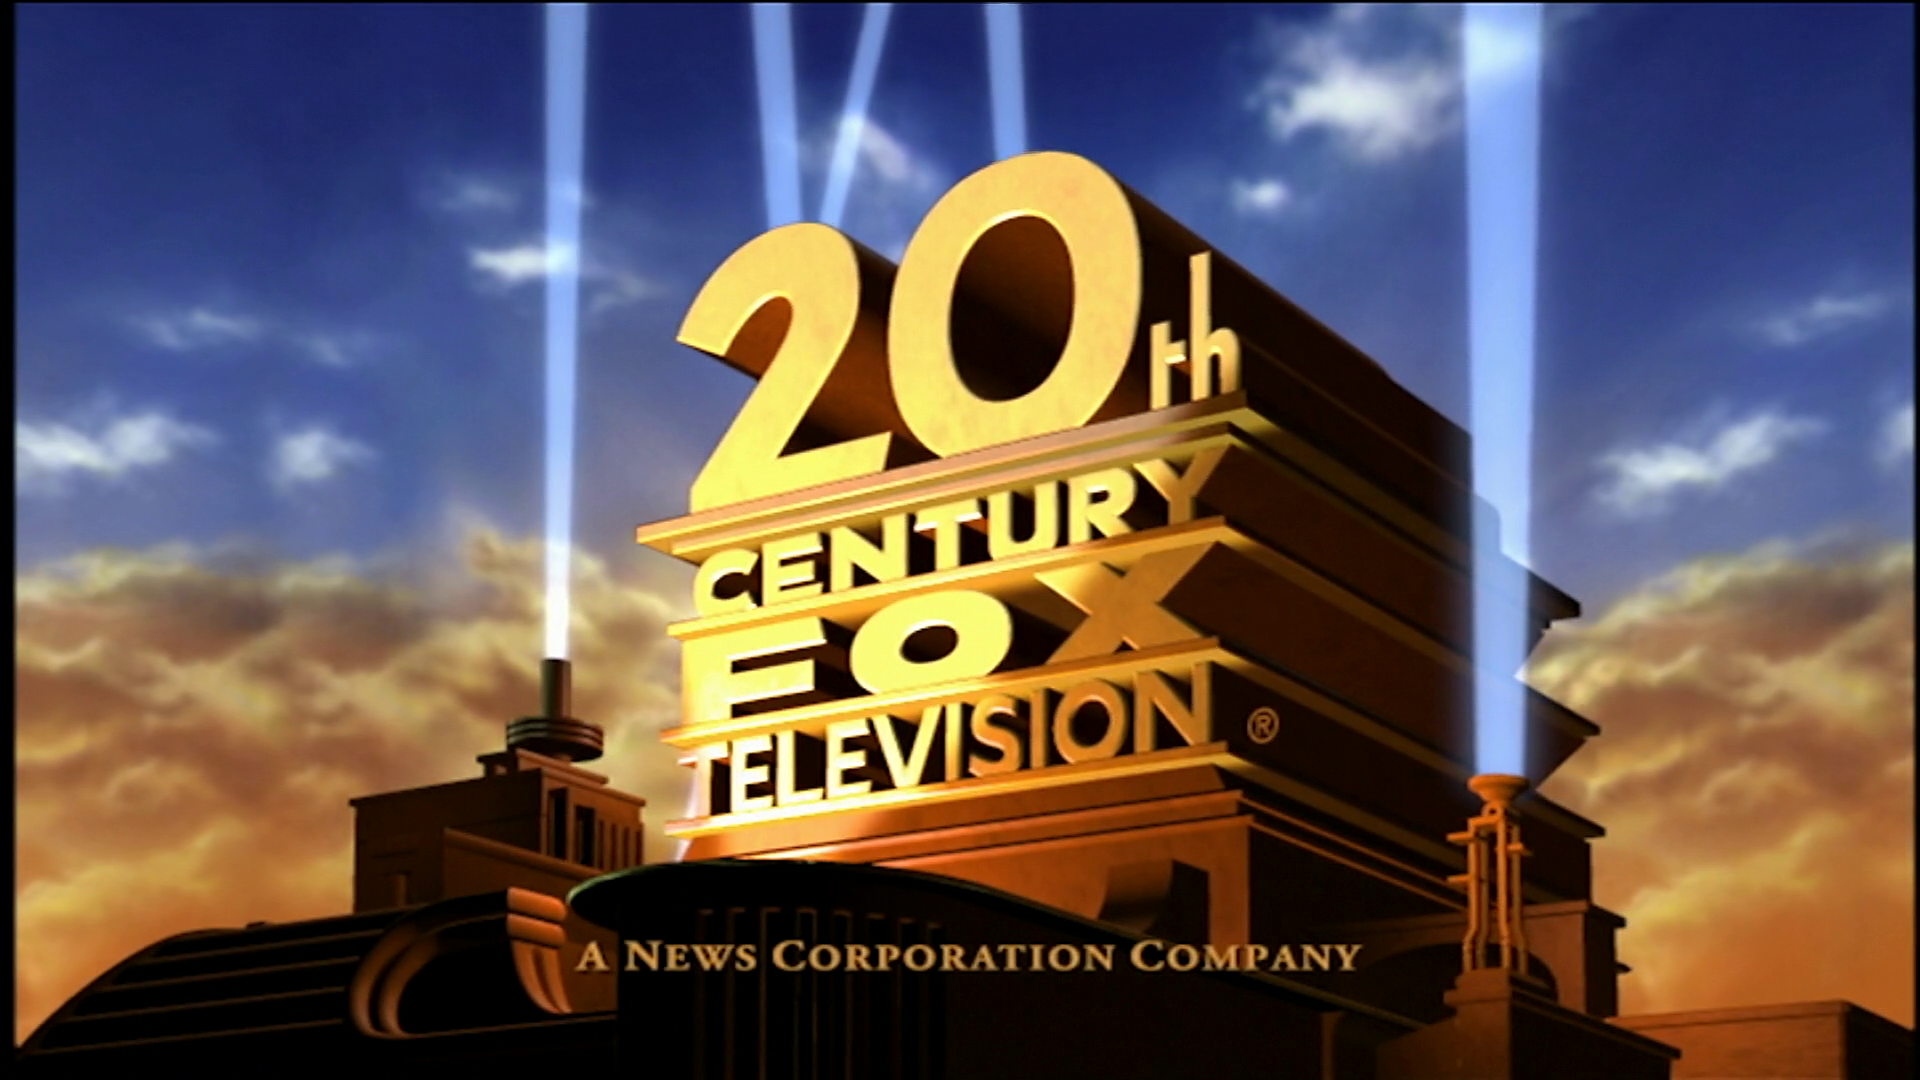 Image 20th Century Fox Television Hdpng Logopedia Fandom Powered